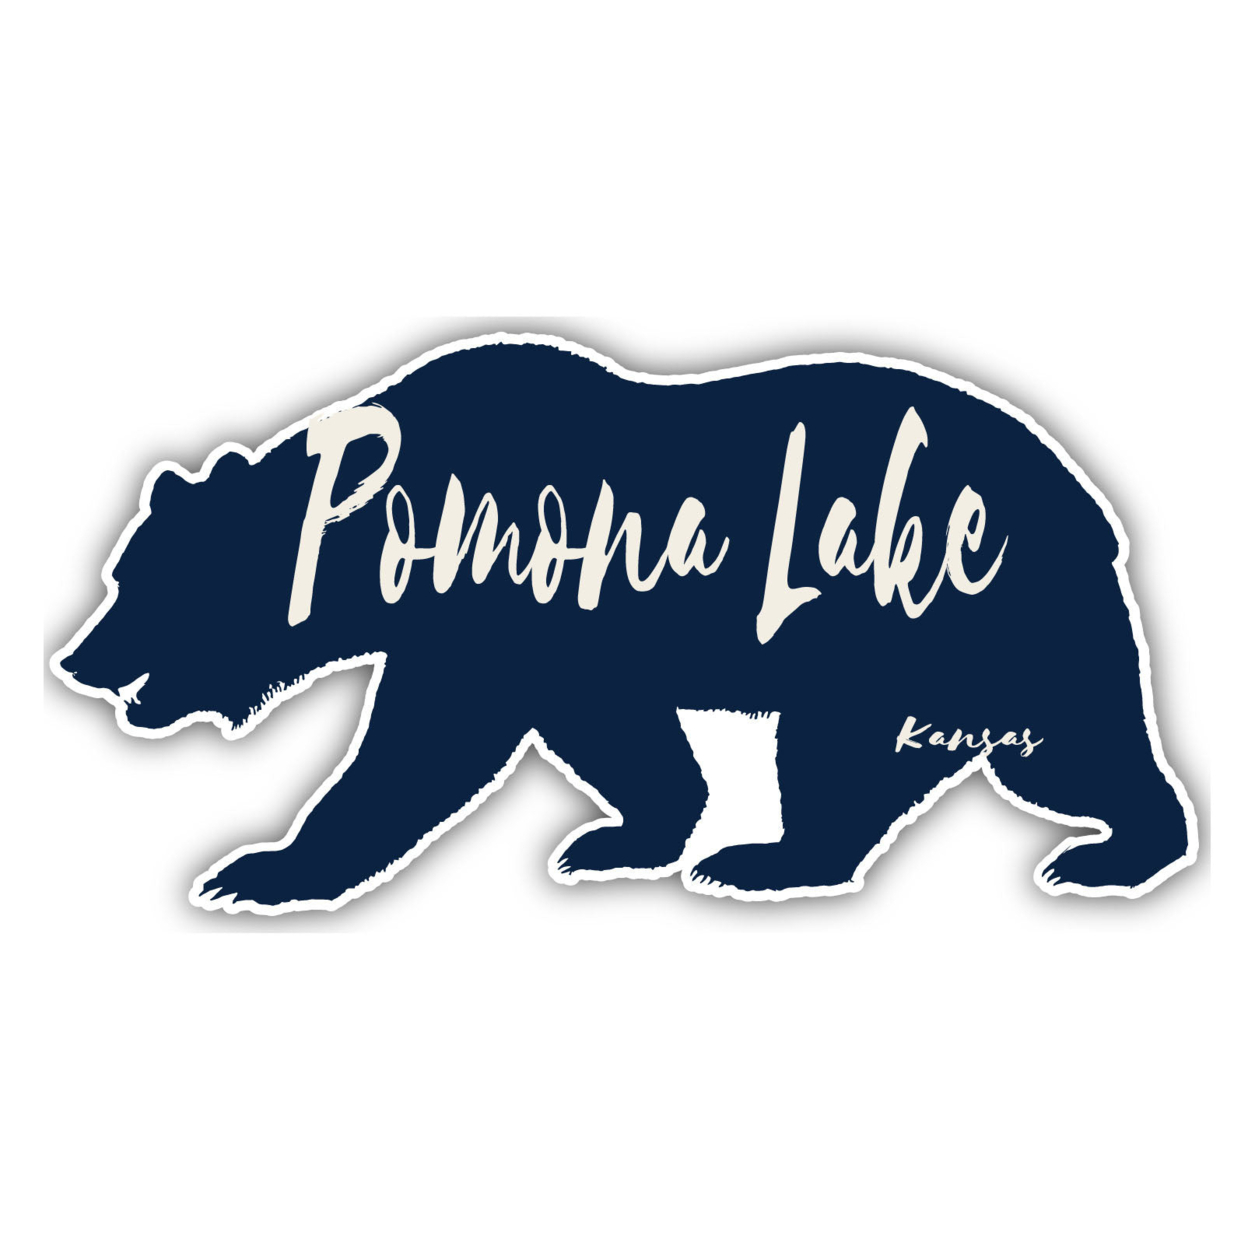 Pomona Lake Kansas Souvenir Decorative Stickers (Choose Theme And Size) - Single Unit, 4-Inch, Bear